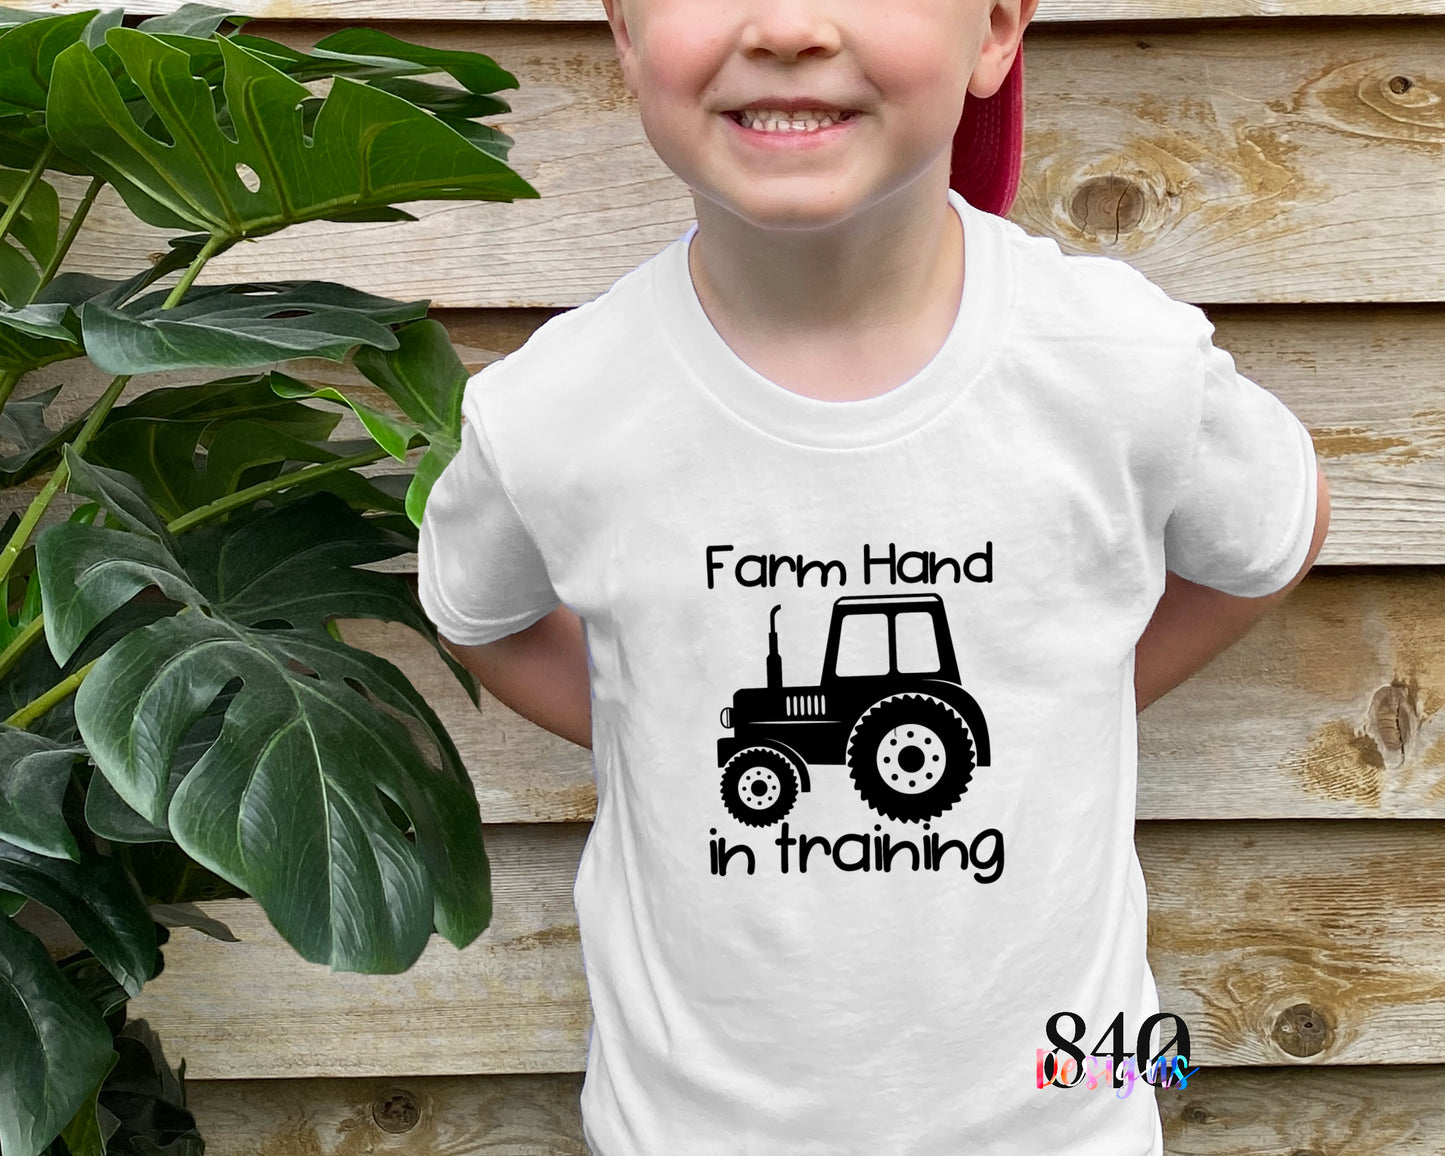 Farm Hand In Training - YOUTH